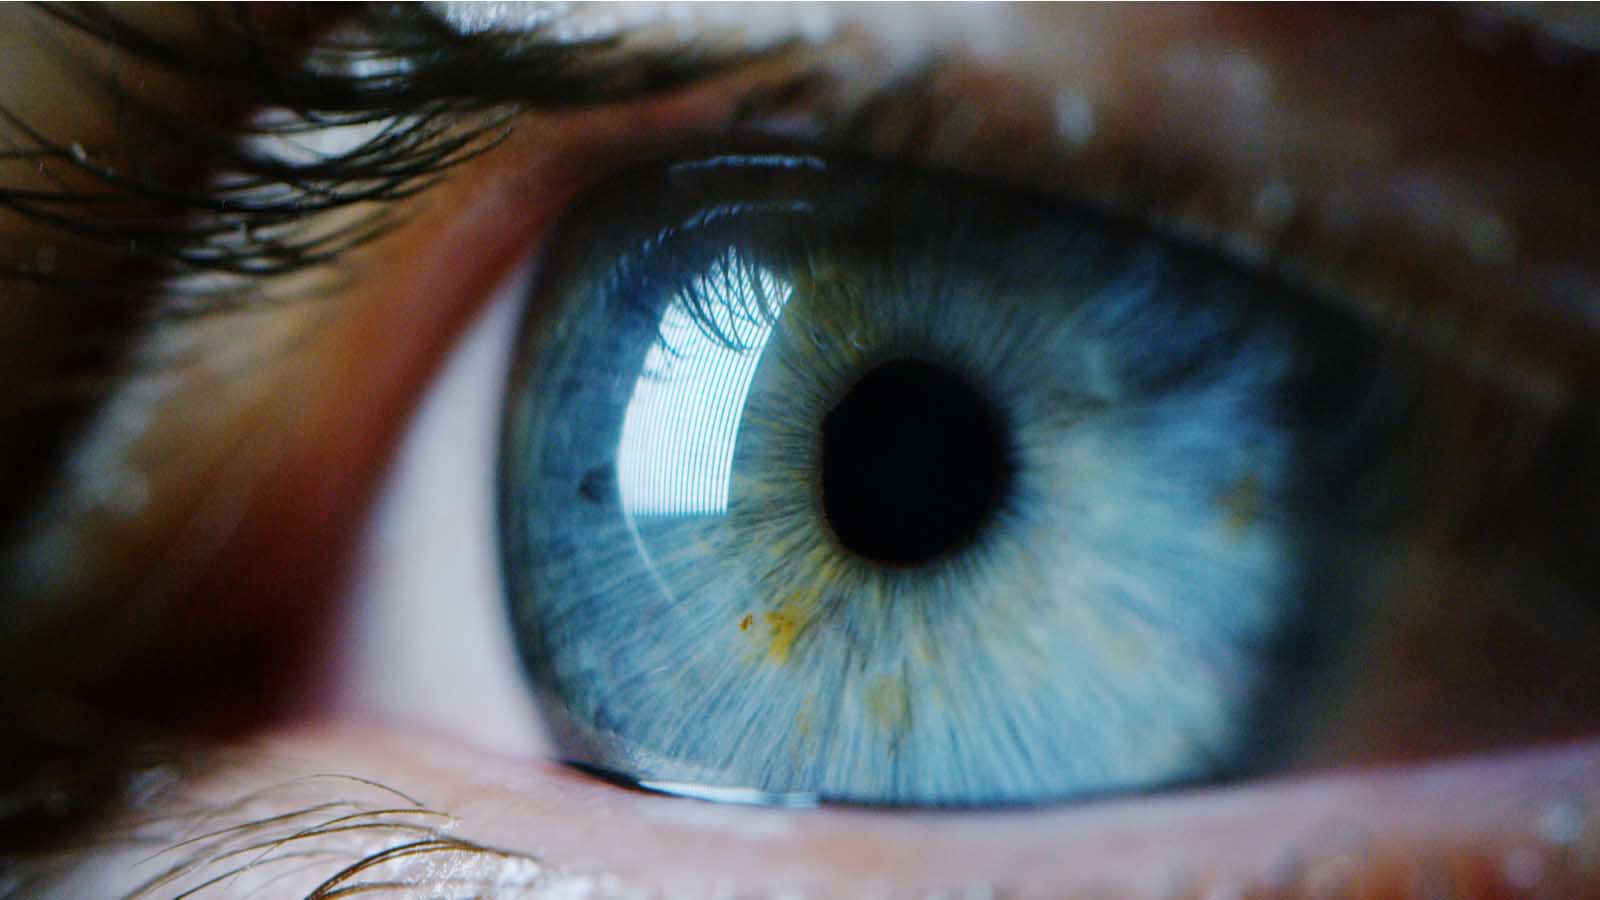 A close-up human eye representing UBX Stock.